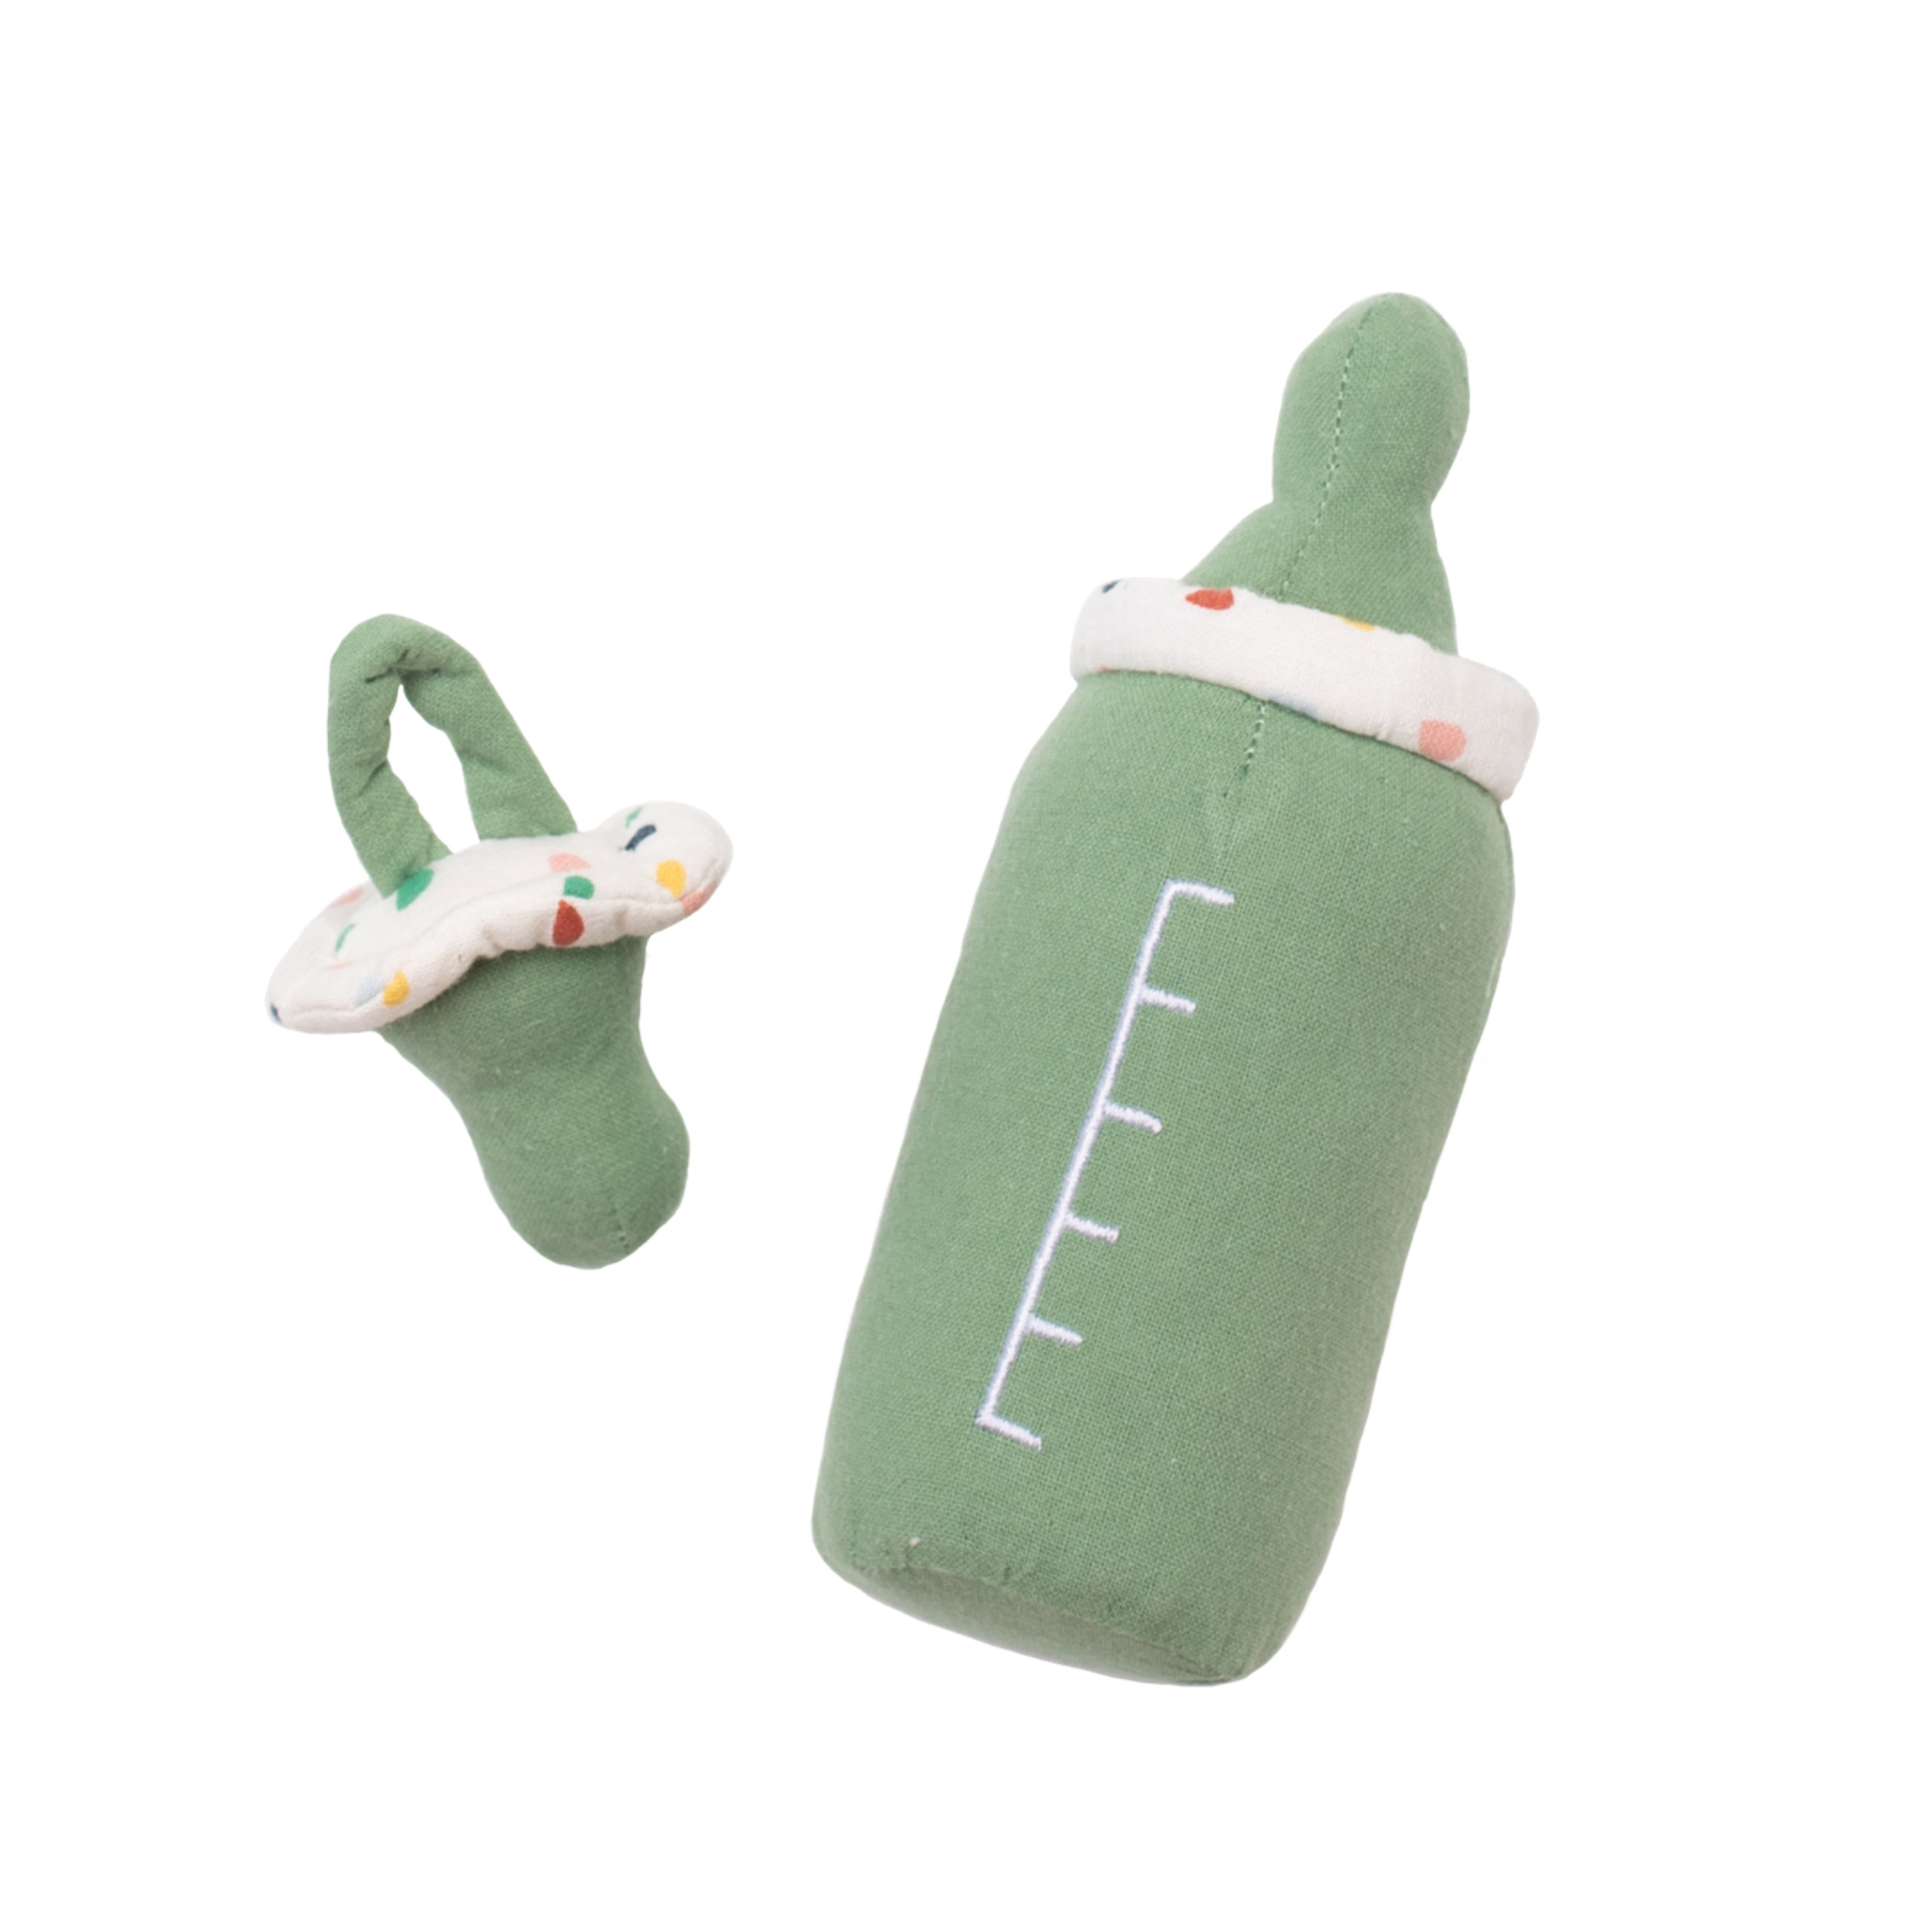 Rubens Barn rubens barn doll accessories bottle & pacifier baby